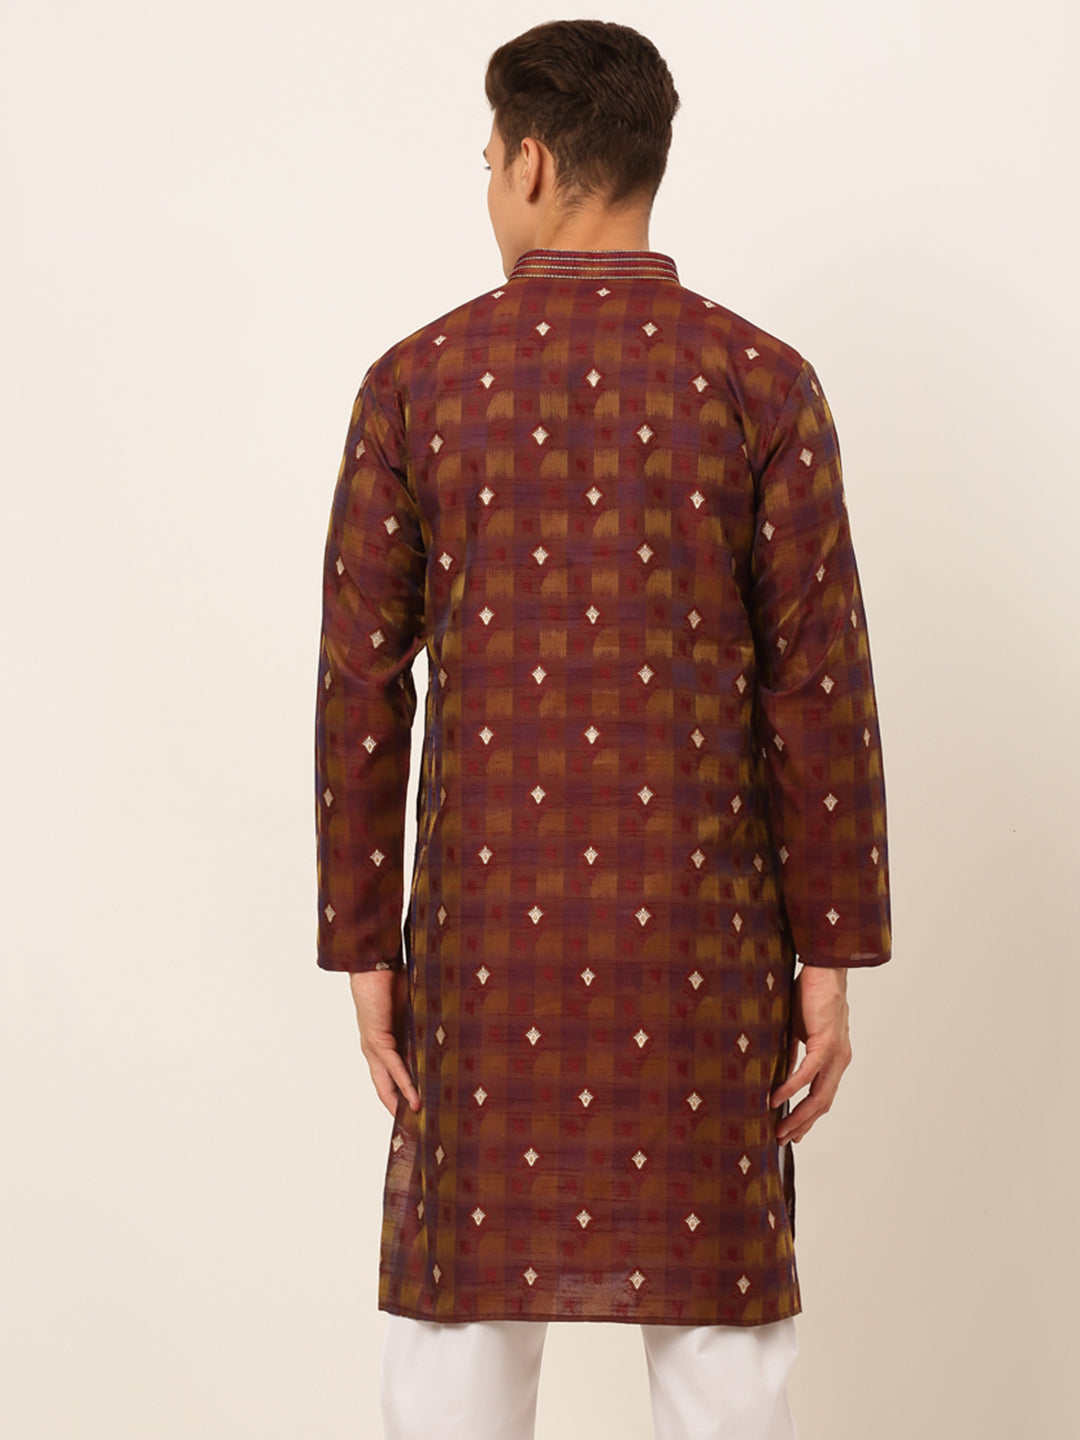 Jompers Men's Maroon Collar Embroidered Woven Design Kurta Pajama